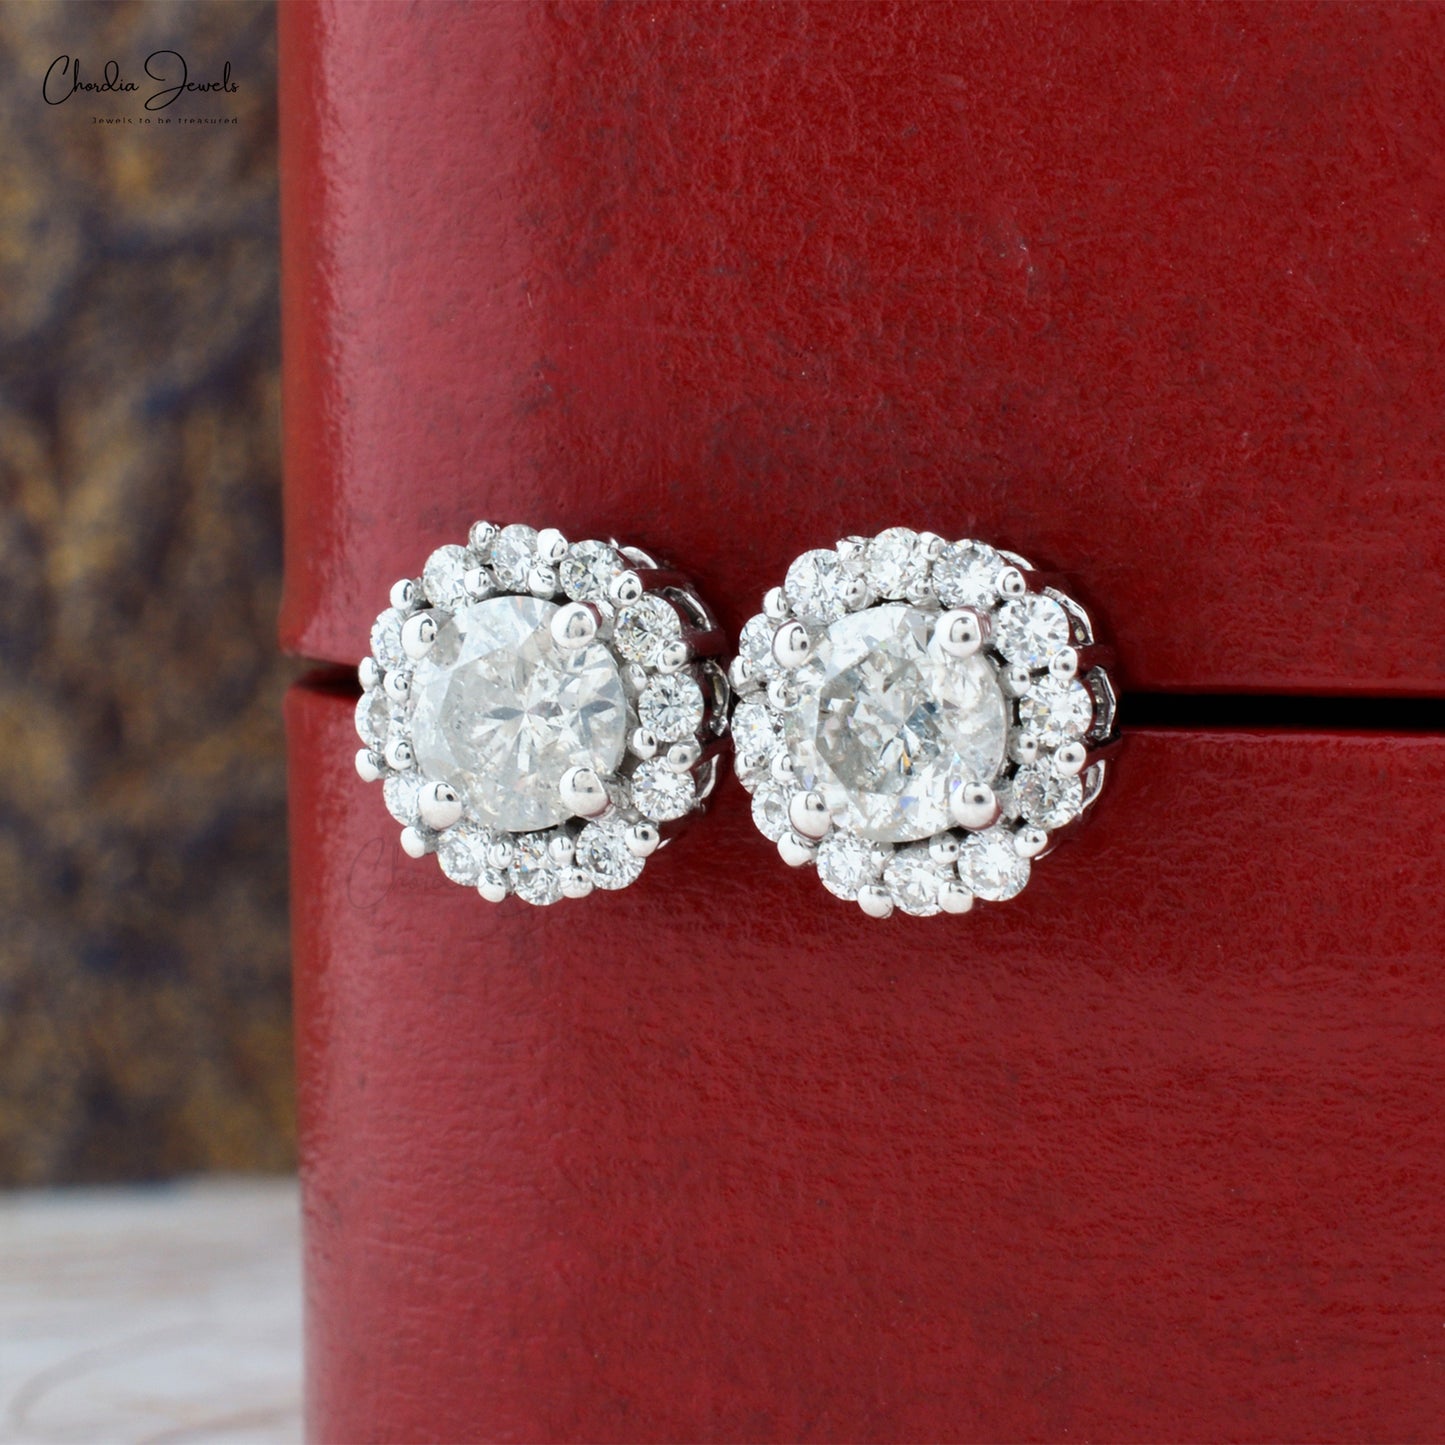 Mini Style Simple Design Authentic White Diamond Halo Stud Earrings Round 1.24 Ct Diamond Studs in 14k Real White Gold Wedding Git